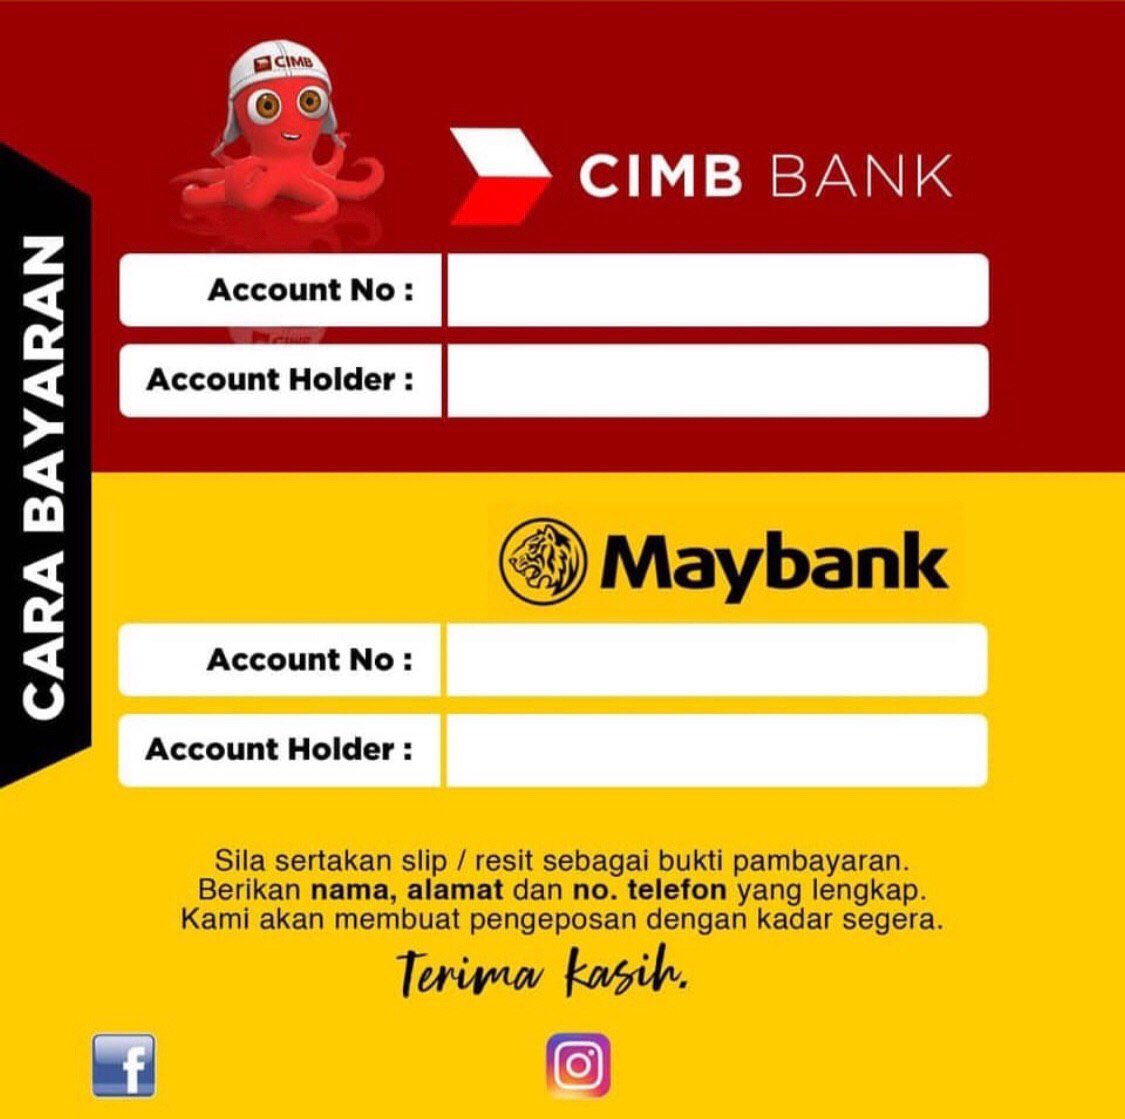 Cimb Bank Account Number Template